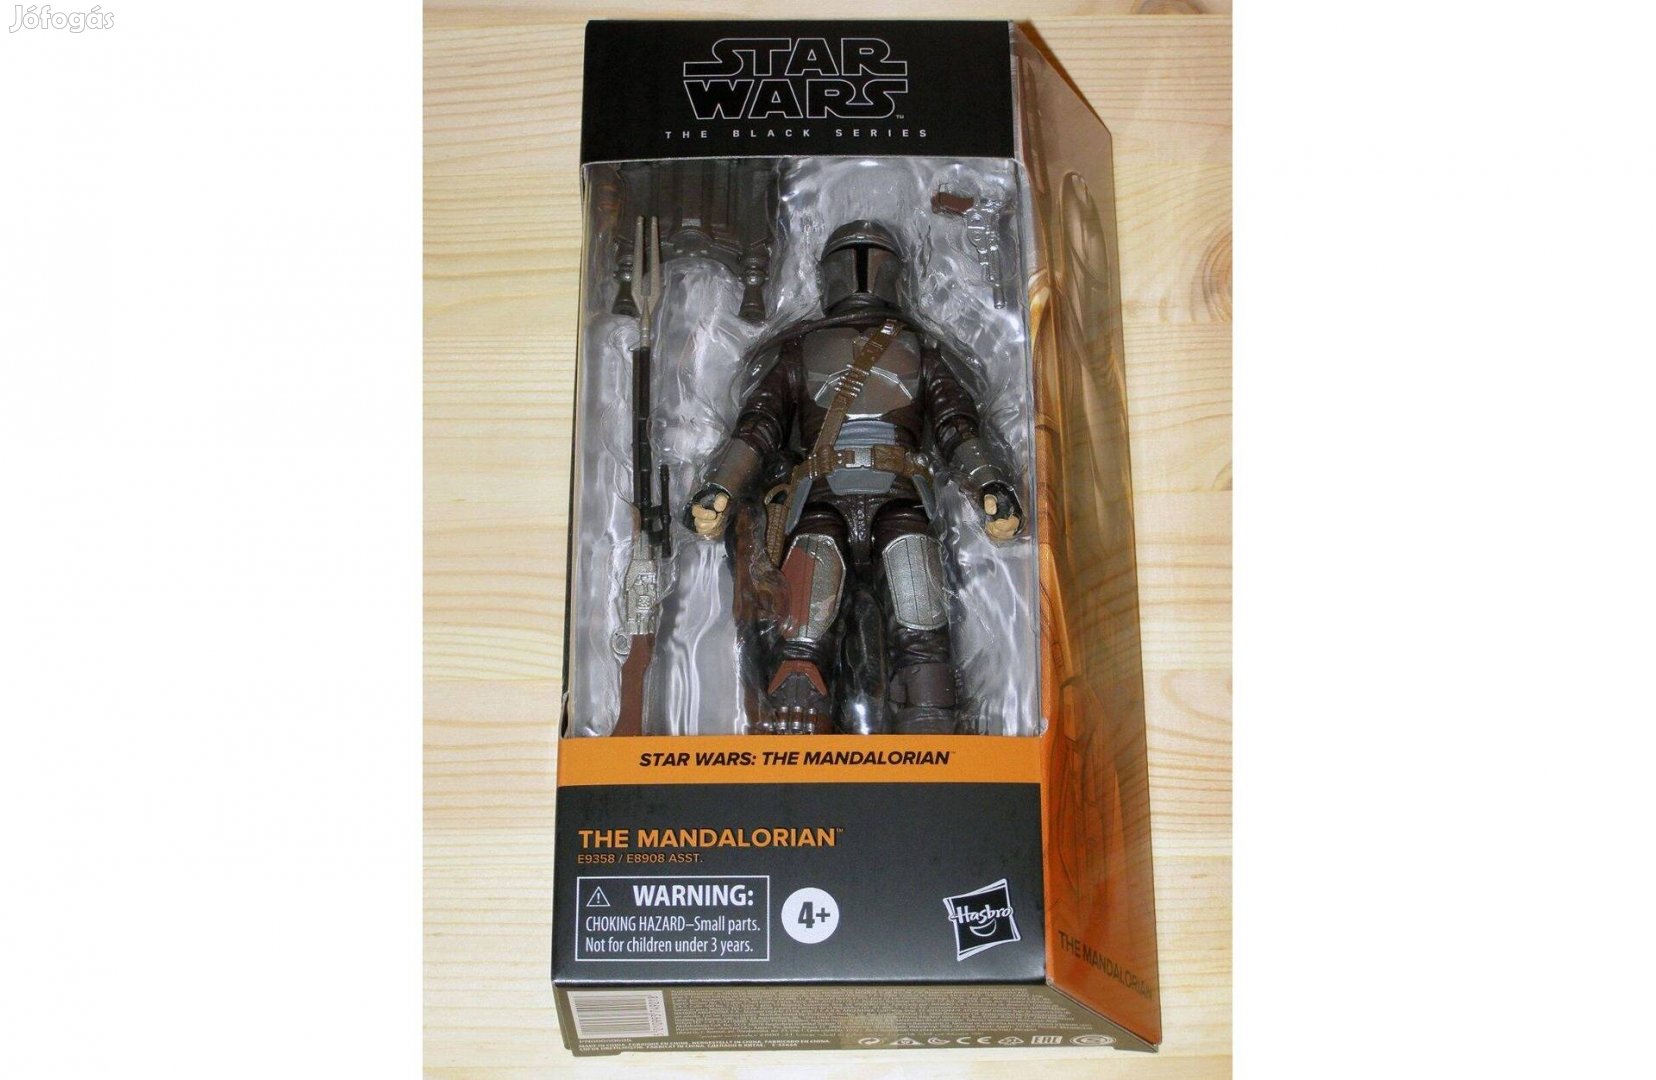 Star Wars Black Series 15 cm (6 inch) The Mandalorian (Beskar) figura